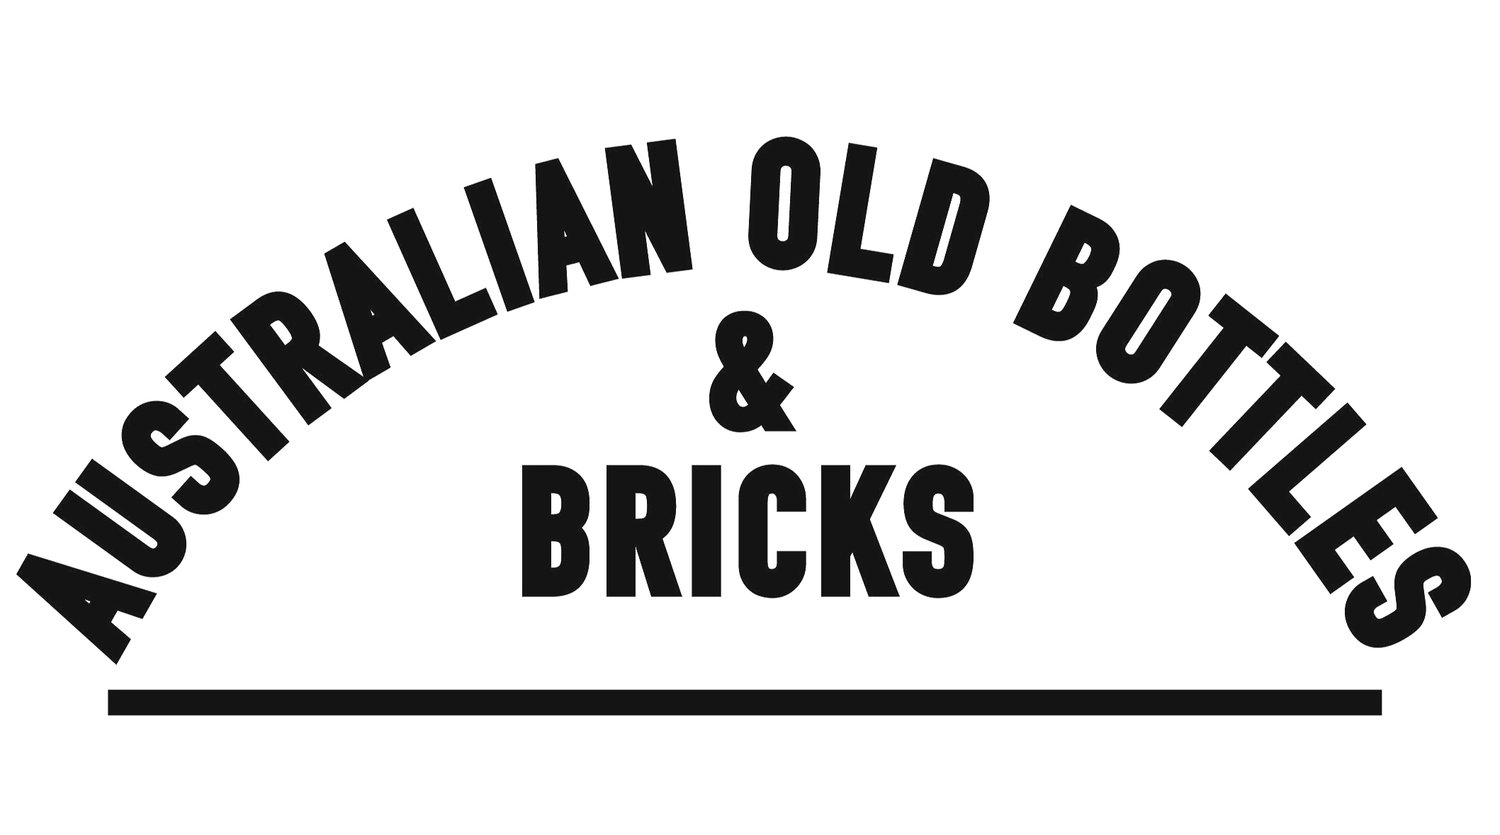 Australian Old Bottles and Bricks - Convict Bricks Gingerbeer Bottles Colonial Bricks Convict Bottles Pottery Vintage Sandstock Bricks Buy and Sell Bricks and Bottles Collectible Bricks Bottle Collection